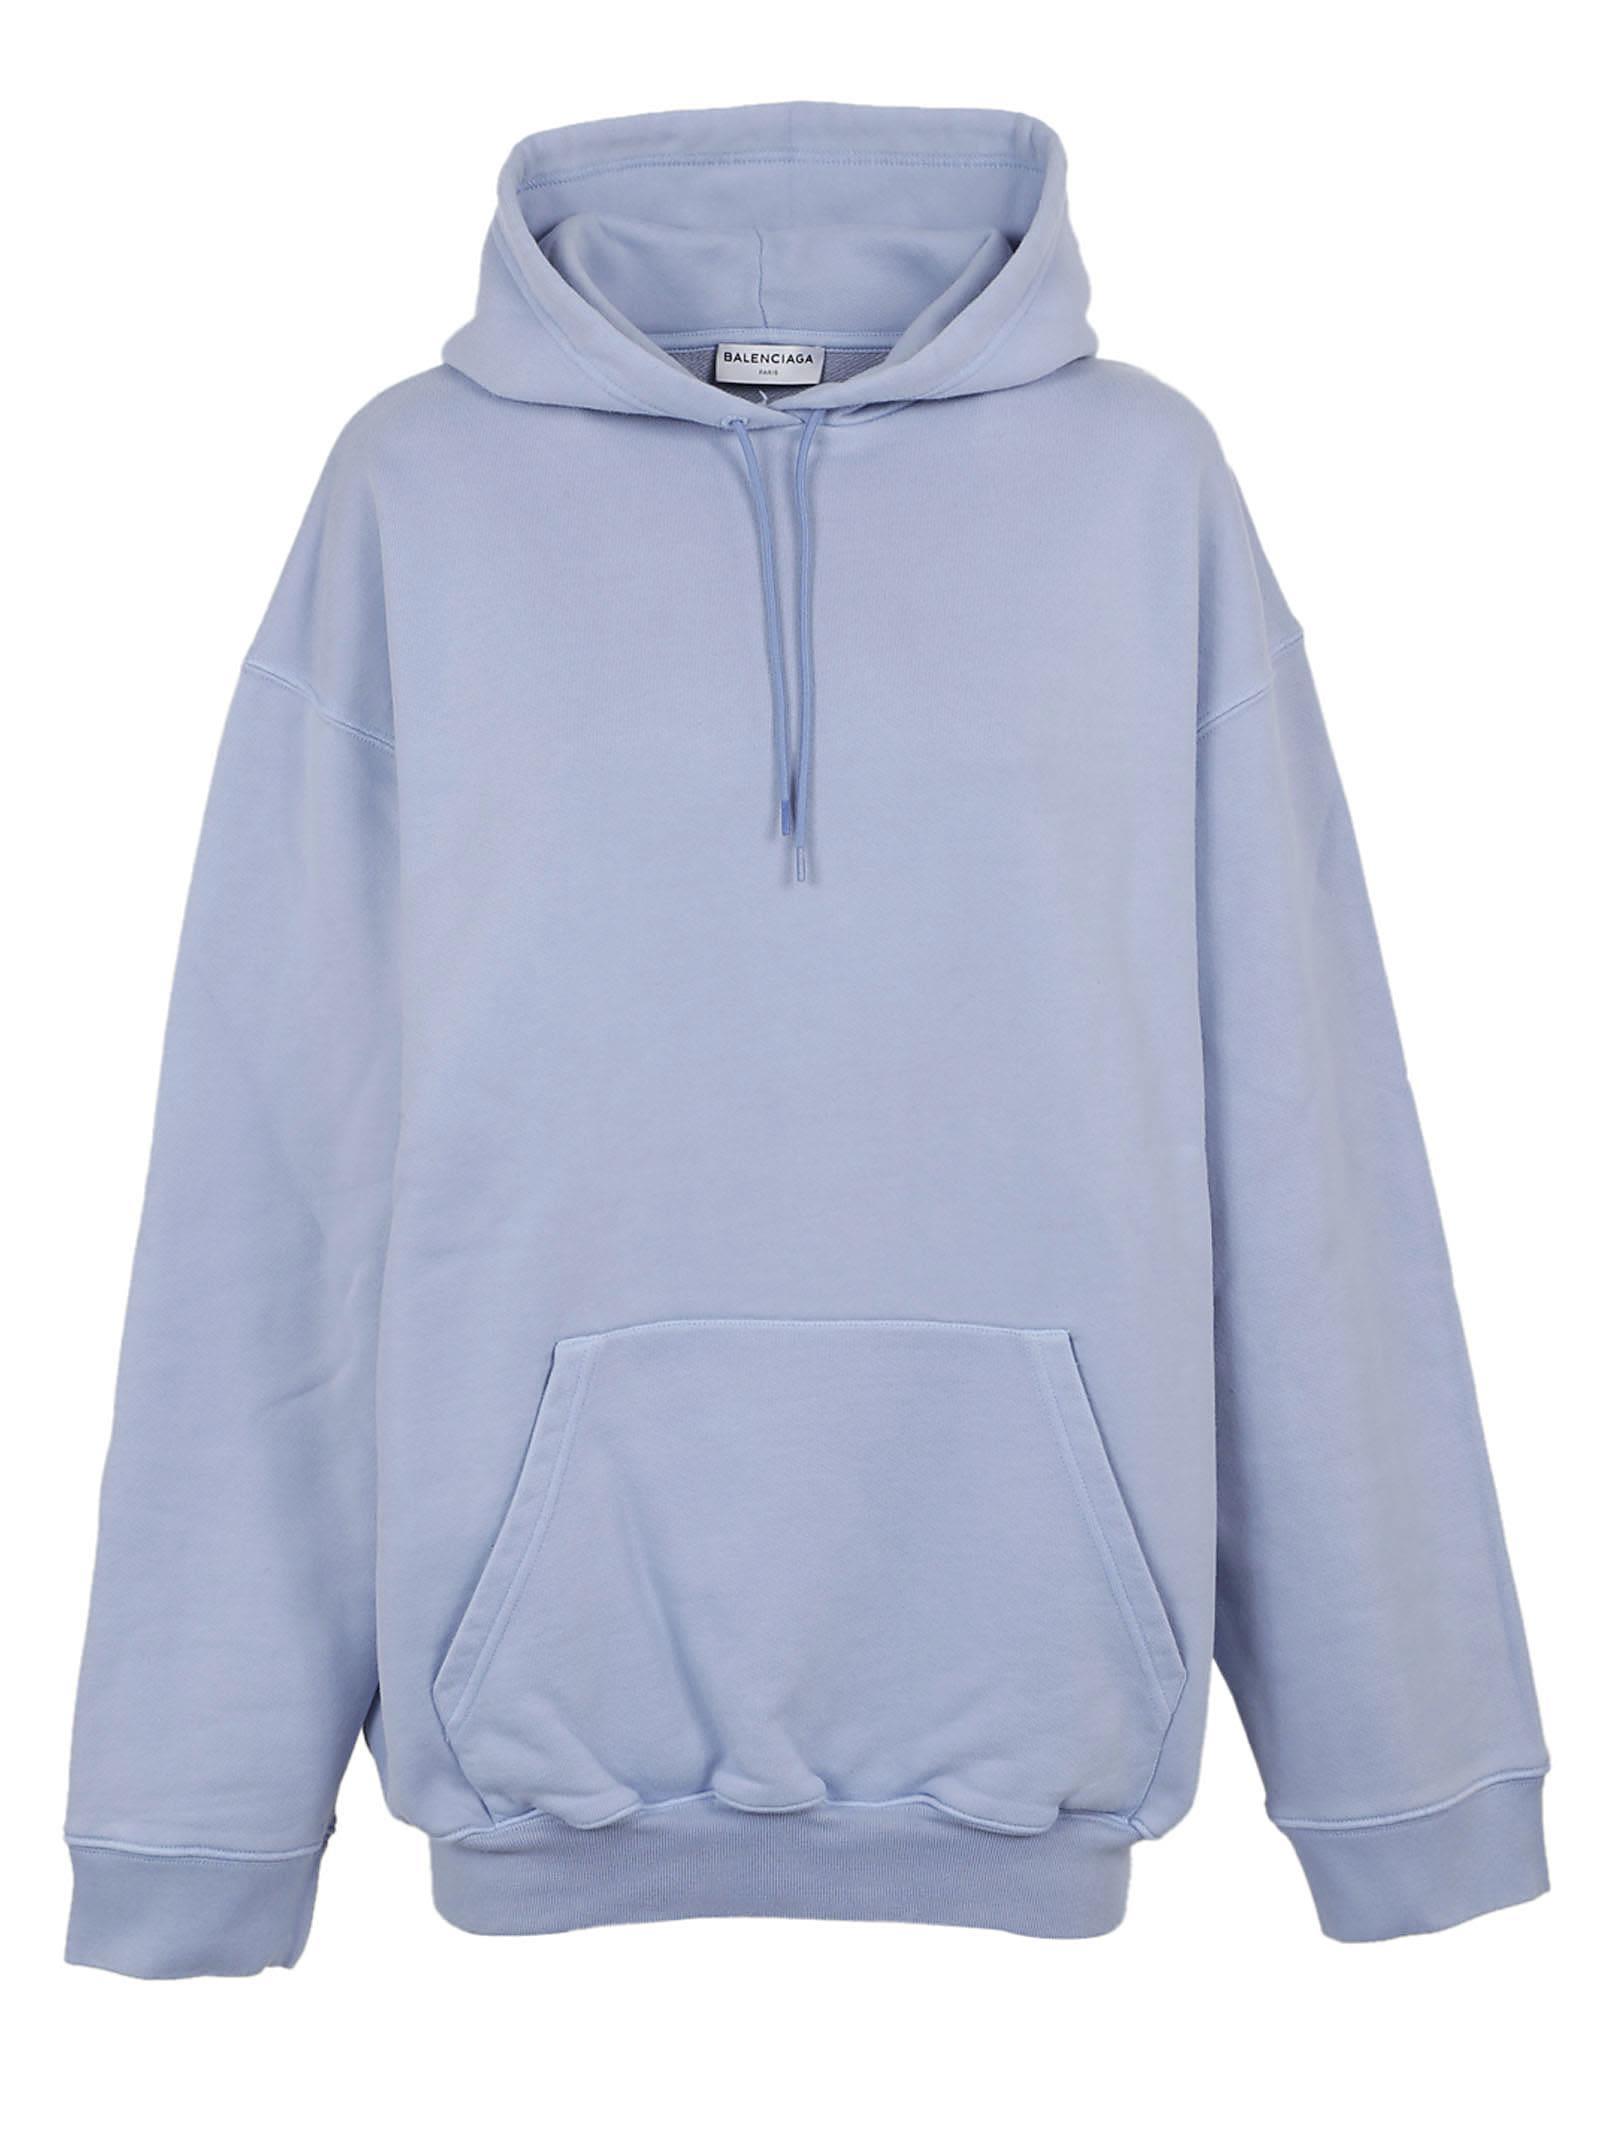 balenciaga hoodie light blue